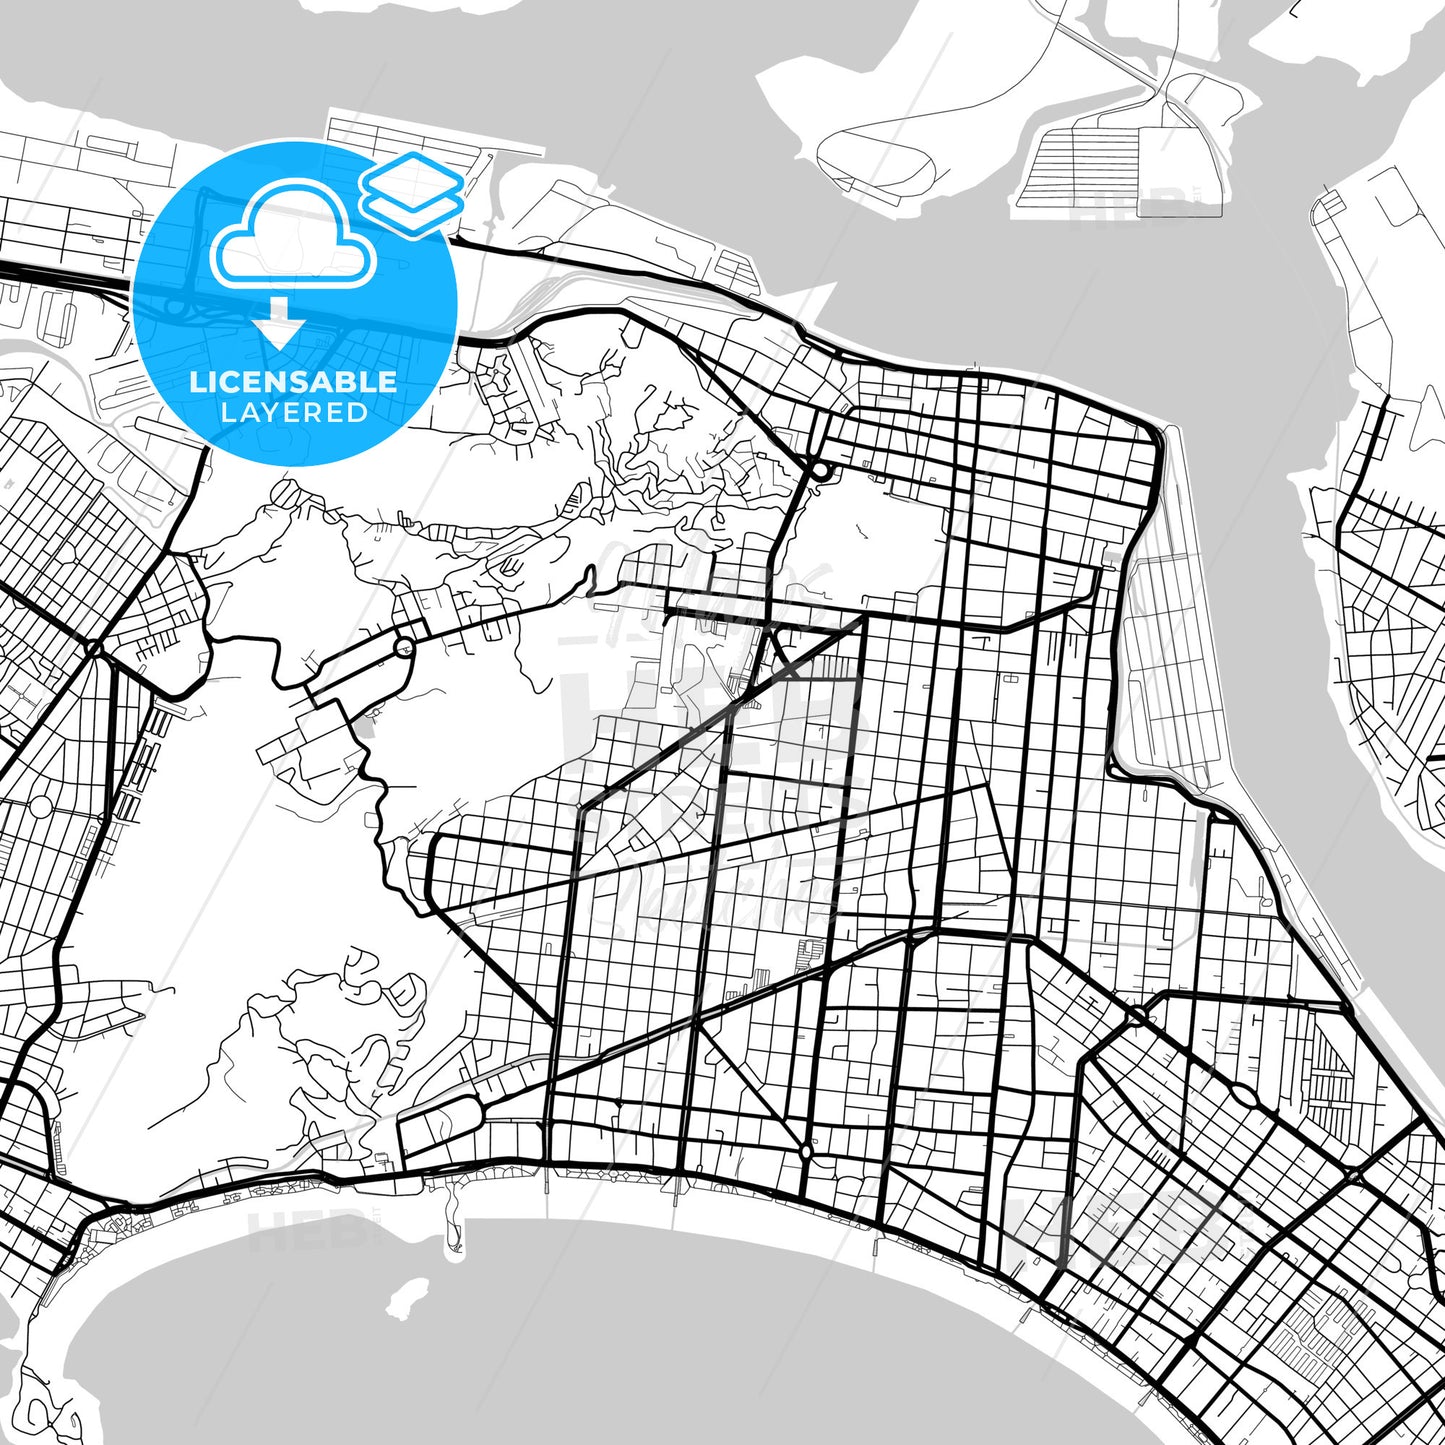 Layered PDF map of Santos, Brazil